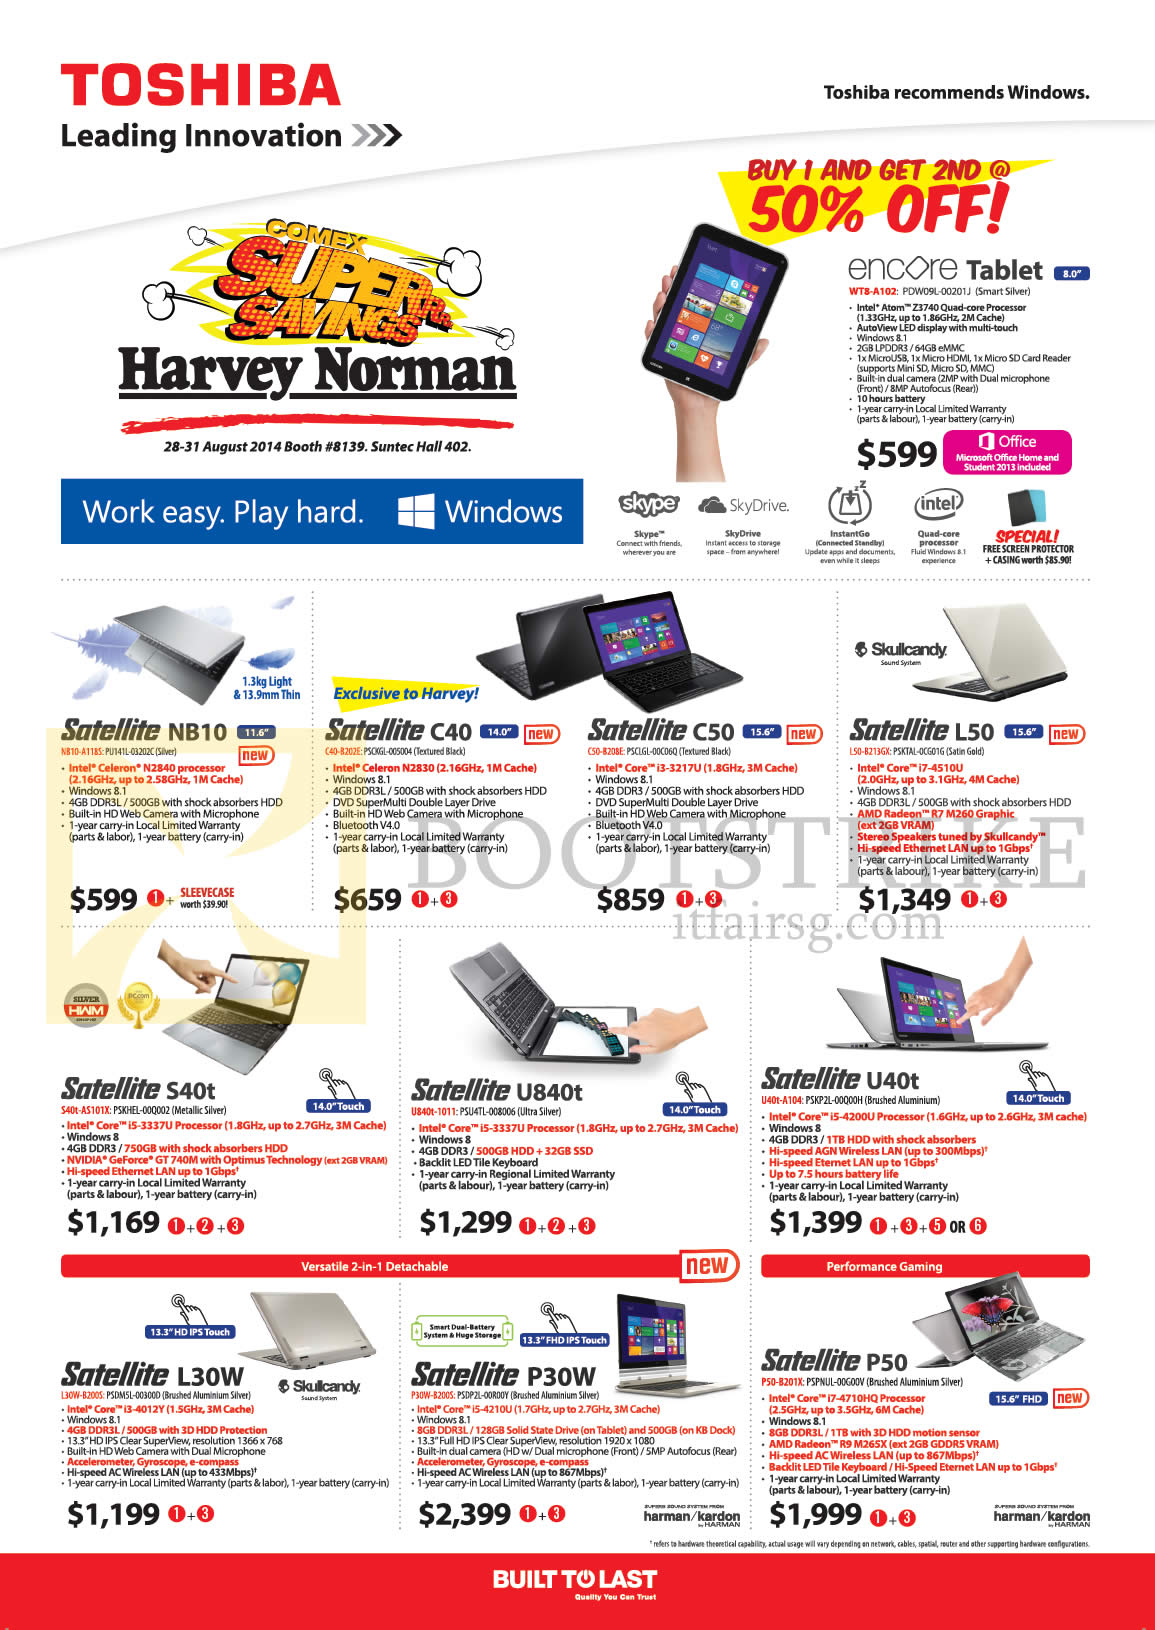 COMEX 2014 price list image brochure of Toshiba Notebooks Satellite NB10, C40, C50, L50, S40t, U840t, U40t, L30W, P30W, P50, Encore Tablet